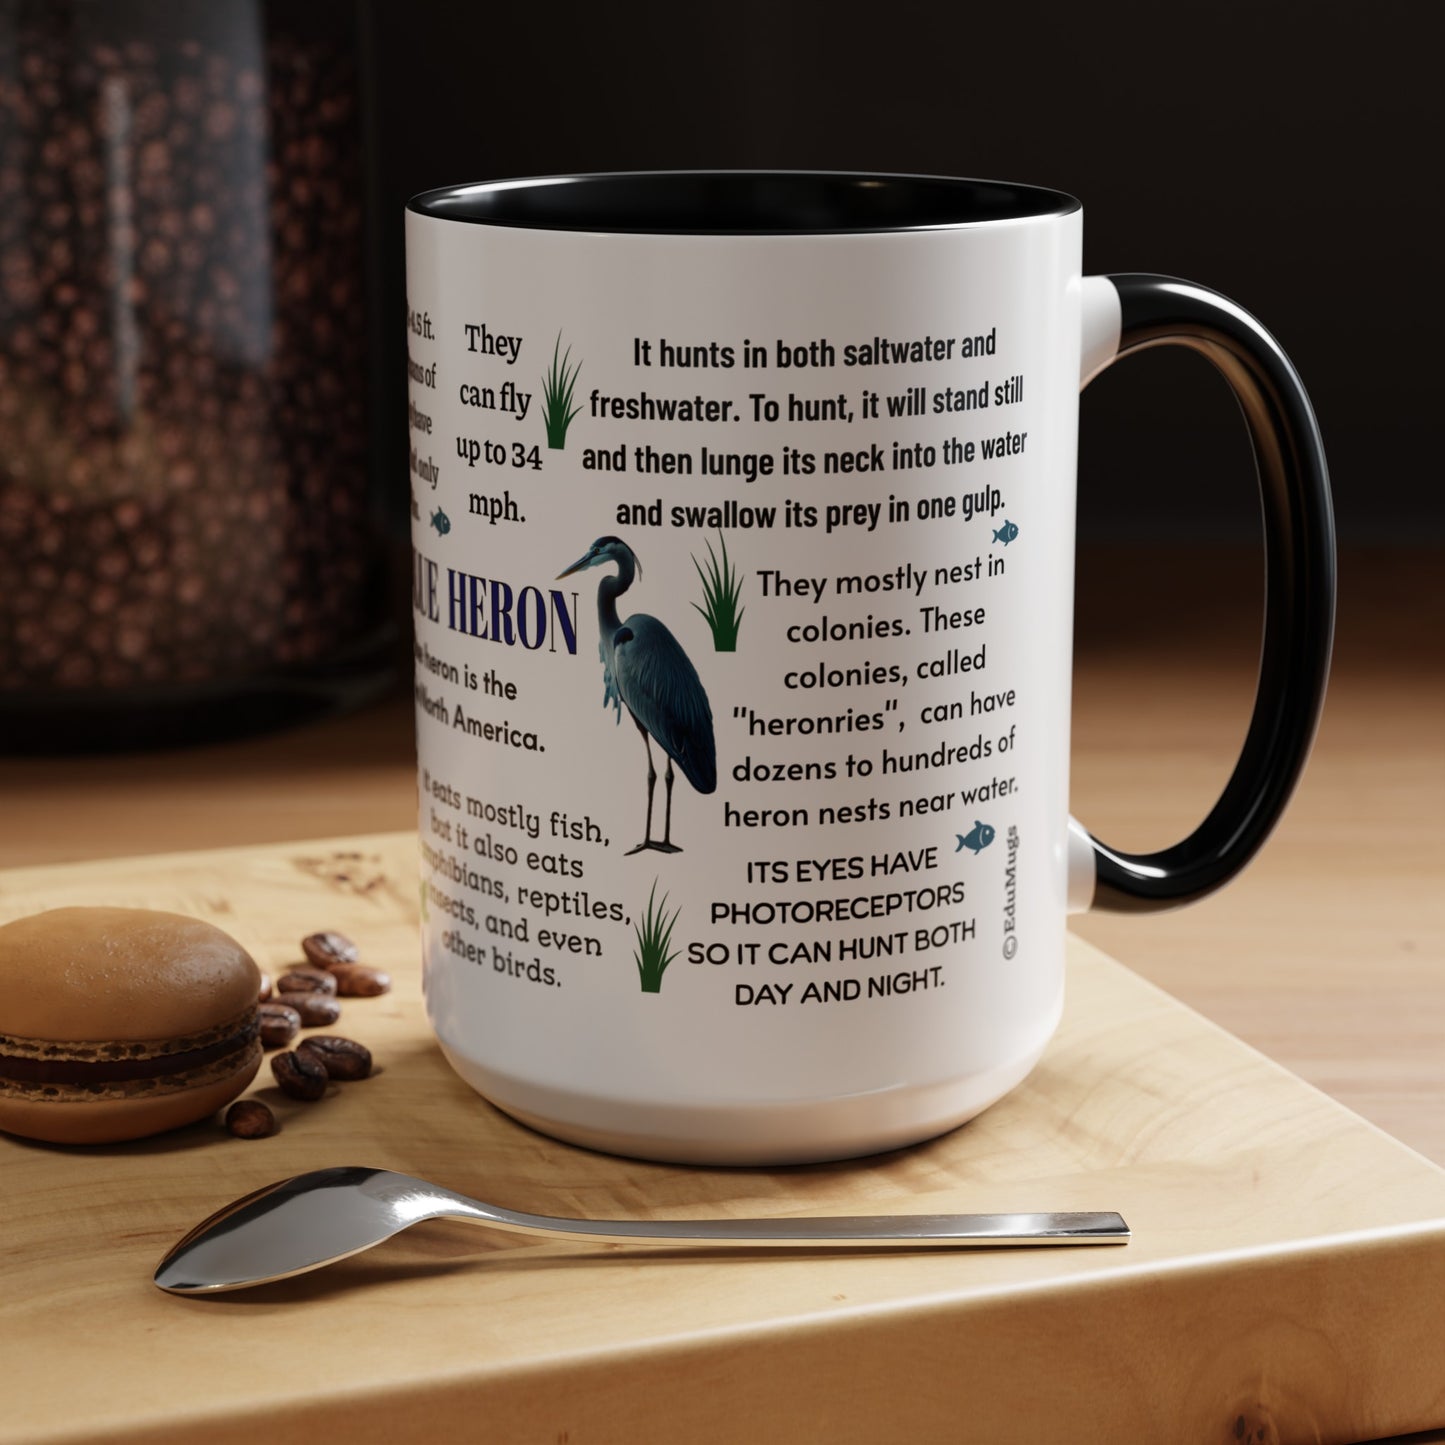 Great Blue Heron Coffee Mug, 11 oz or 15oz